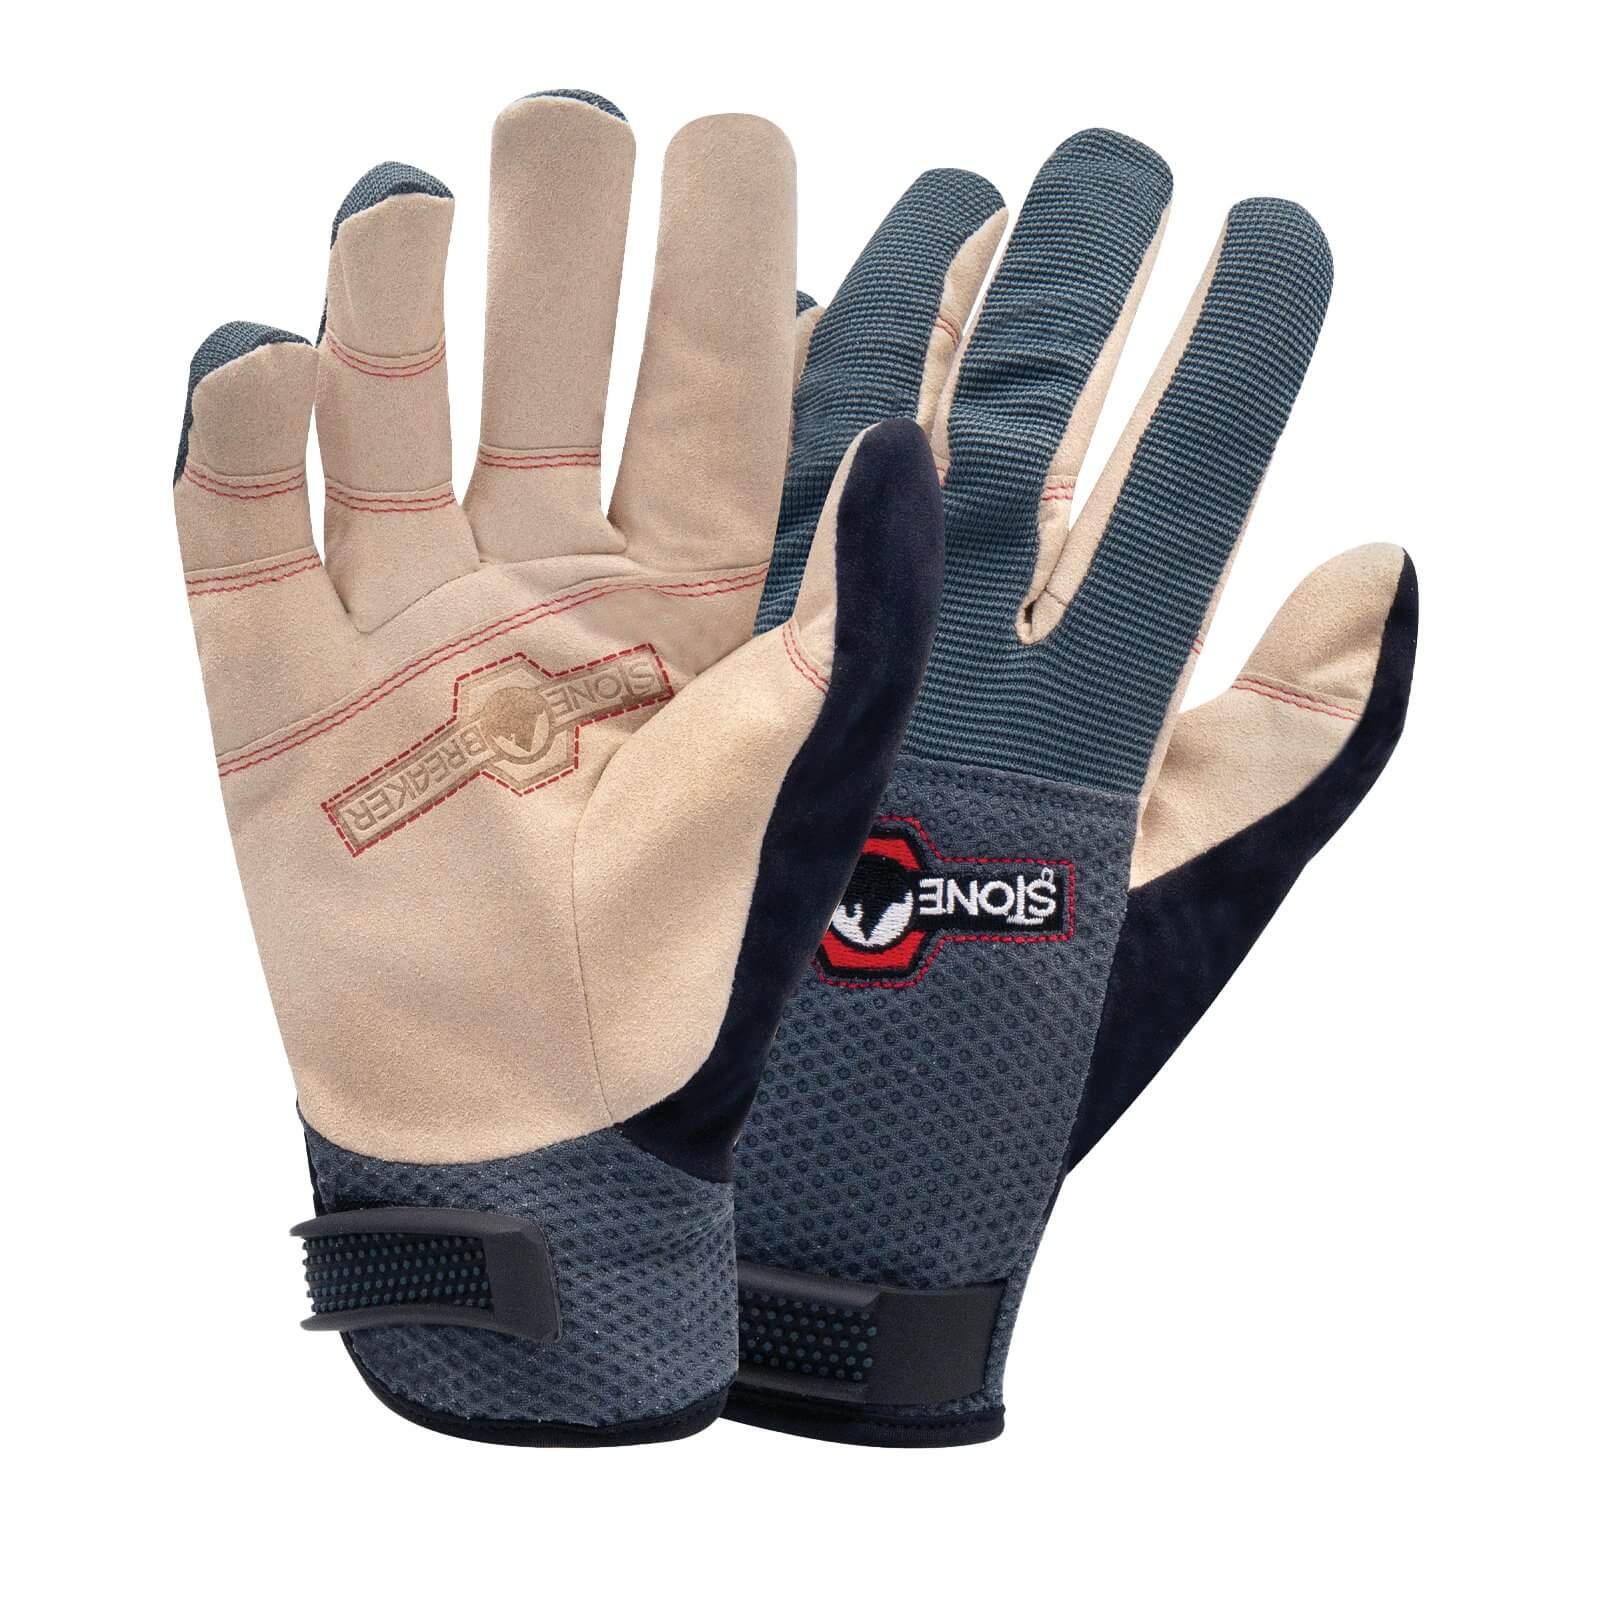 StoneBreaker Nailbender Trades Work Gloves - Large - Charcoal